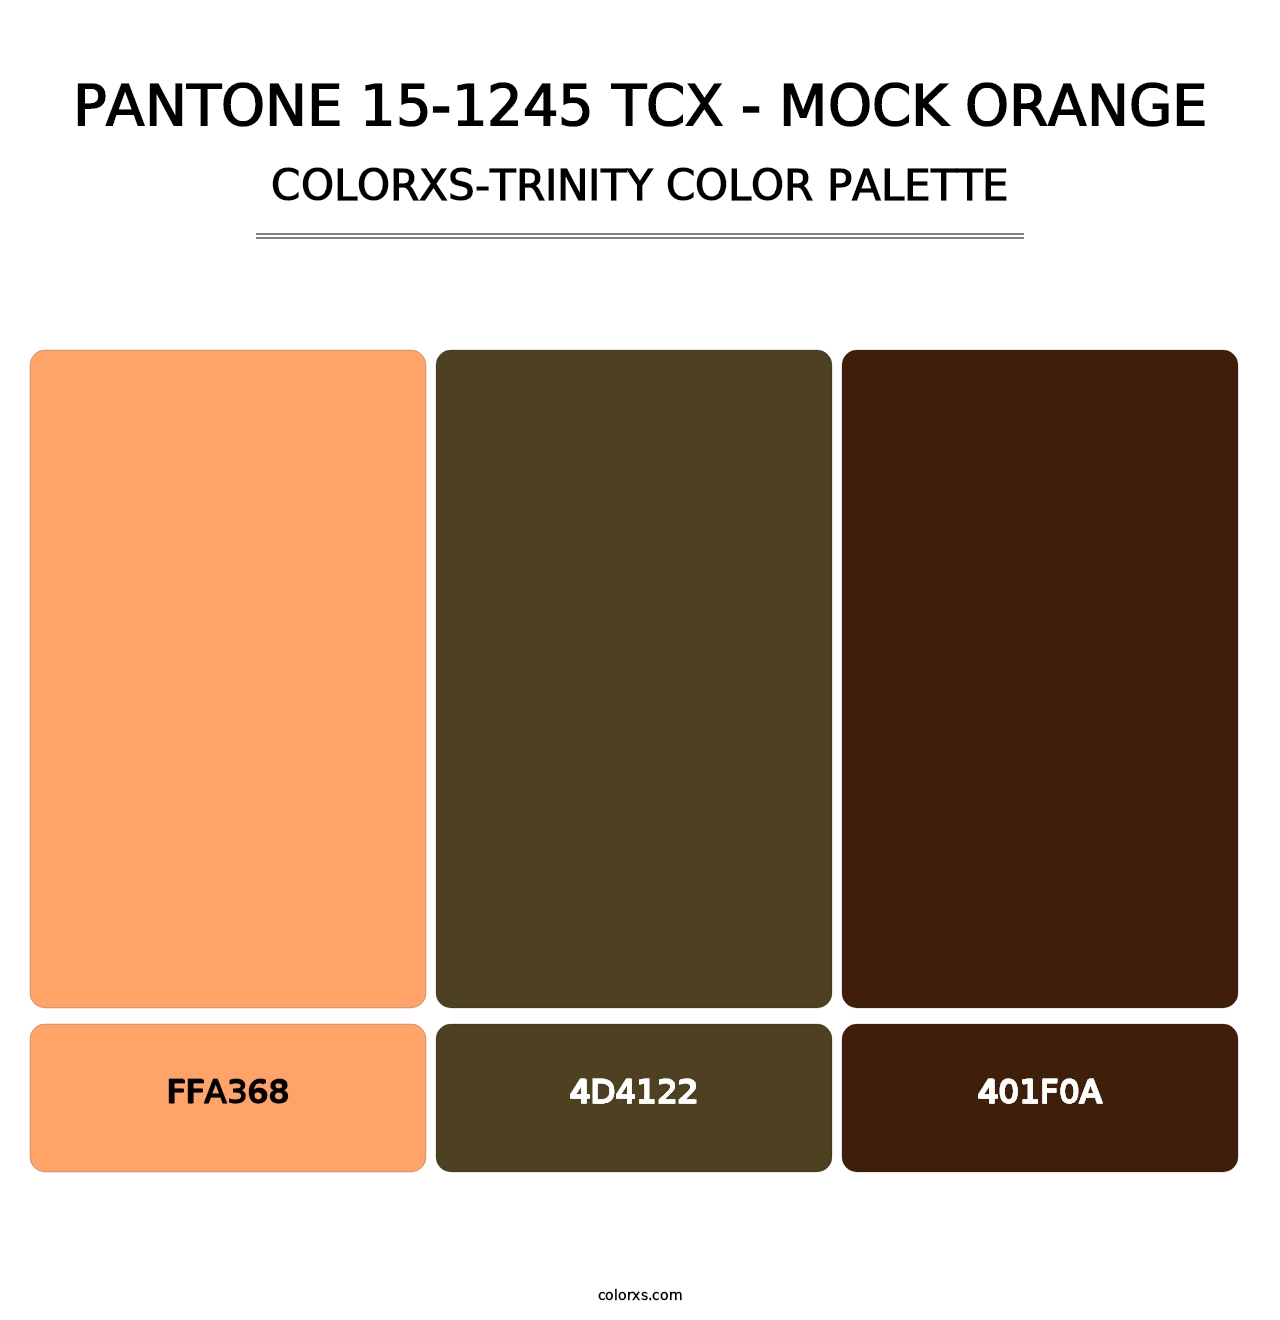 PANTONE 15-1245 TCX - Mock Orange - Colorxs Trinity Palette